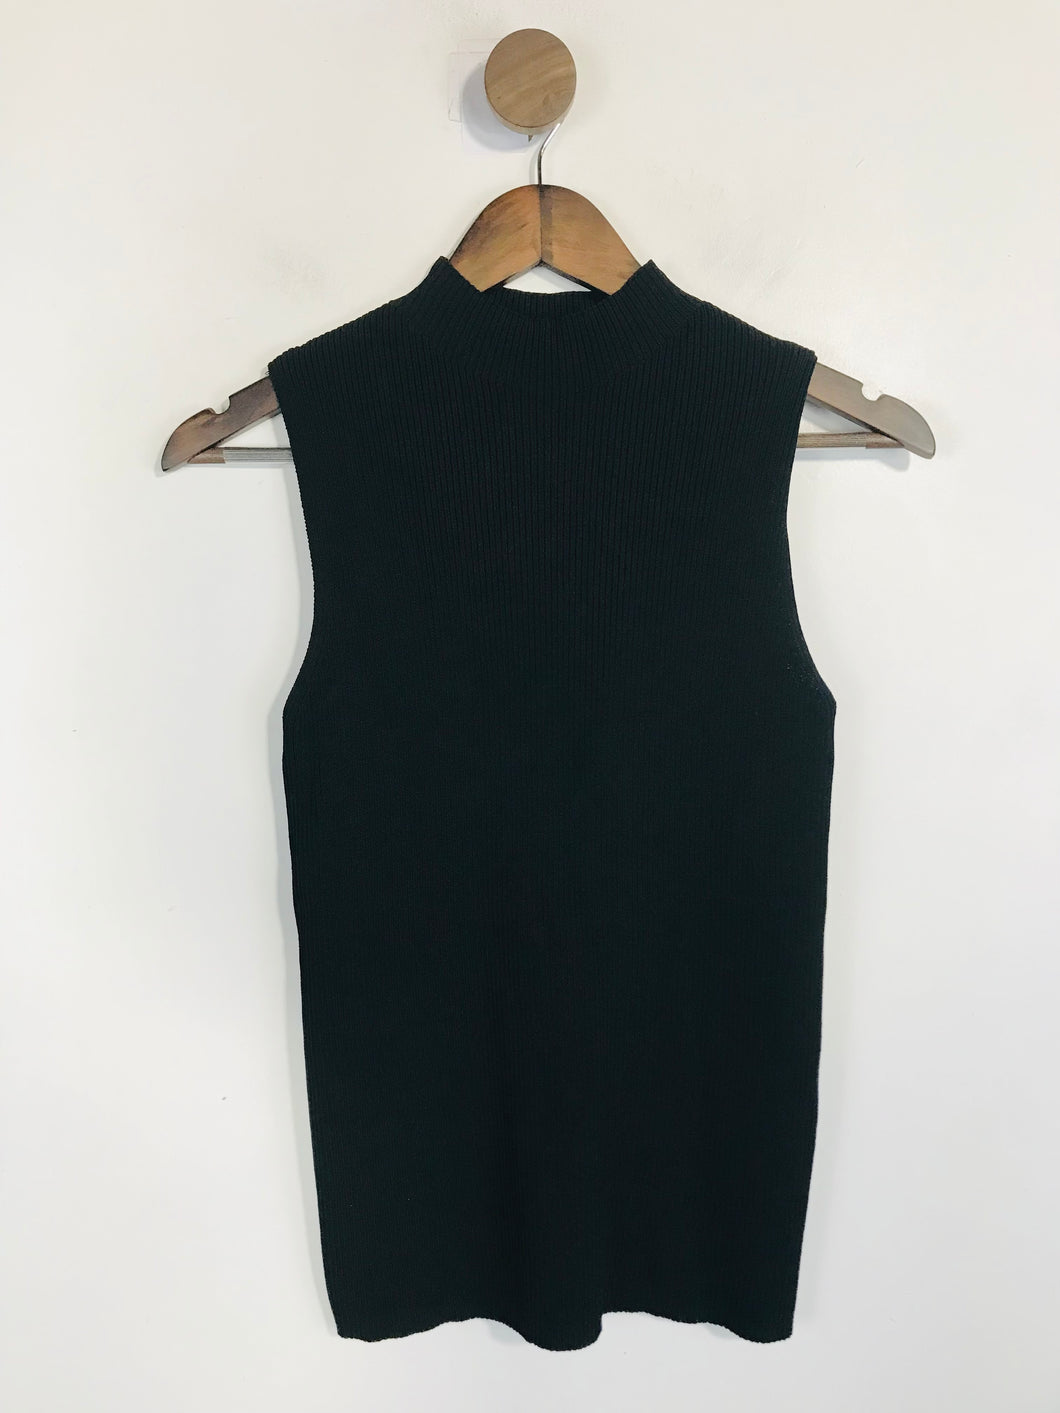 Reiss Women's High Neck Knit Tank Top | S UK8 | Black